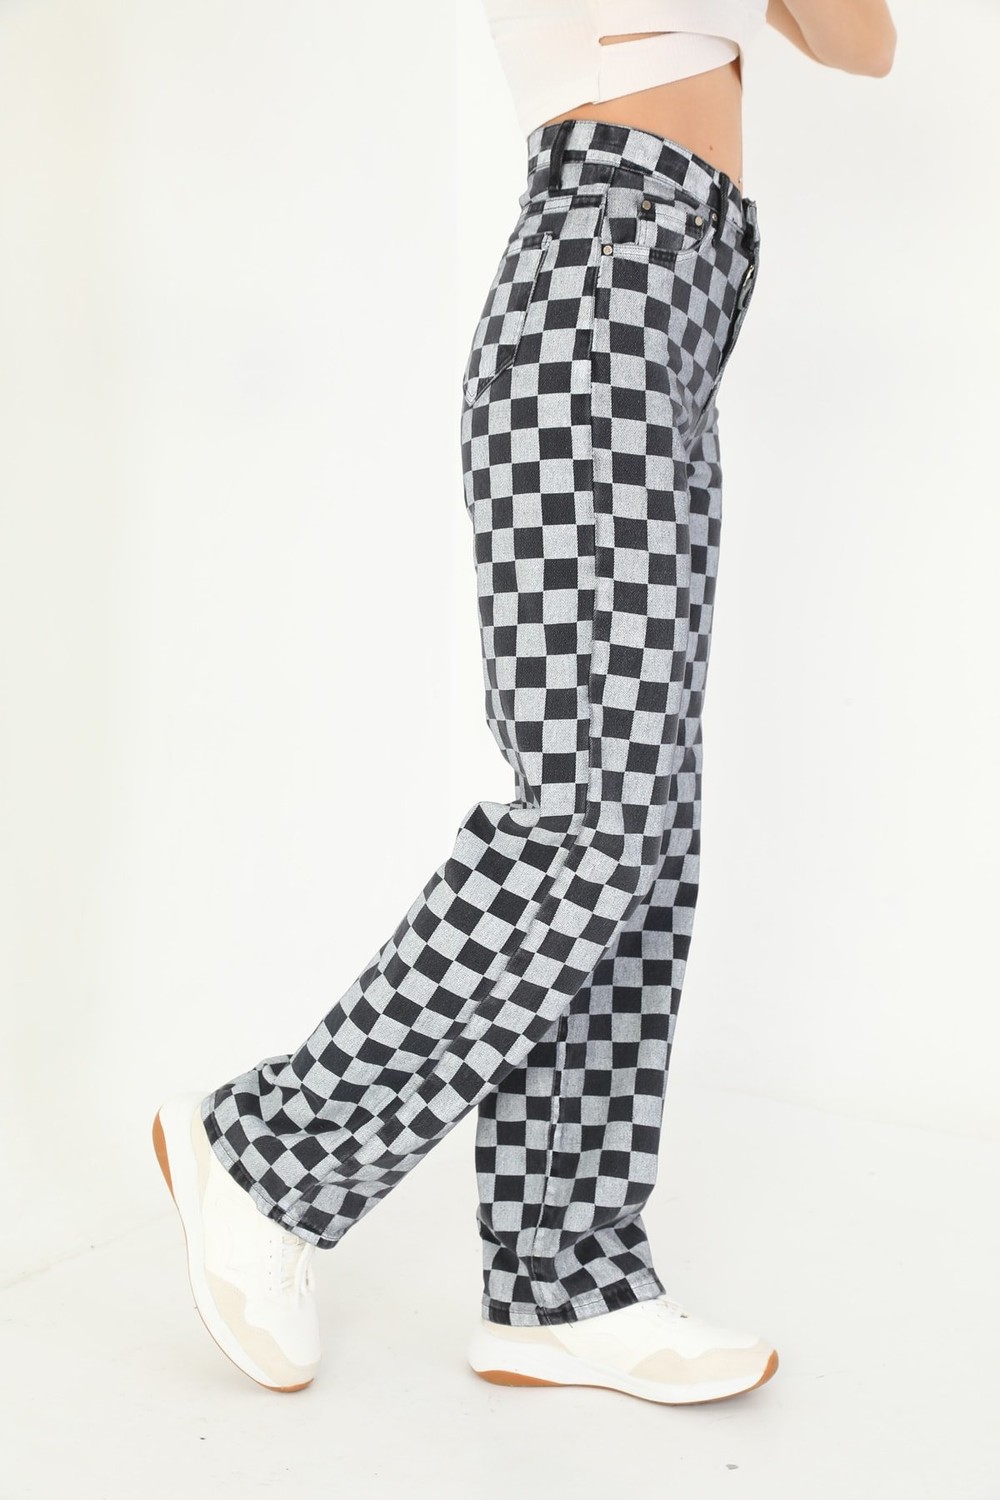 BİKELİFE Black Checkerboard Pattern High Waist Wide Leg Jeans Pants